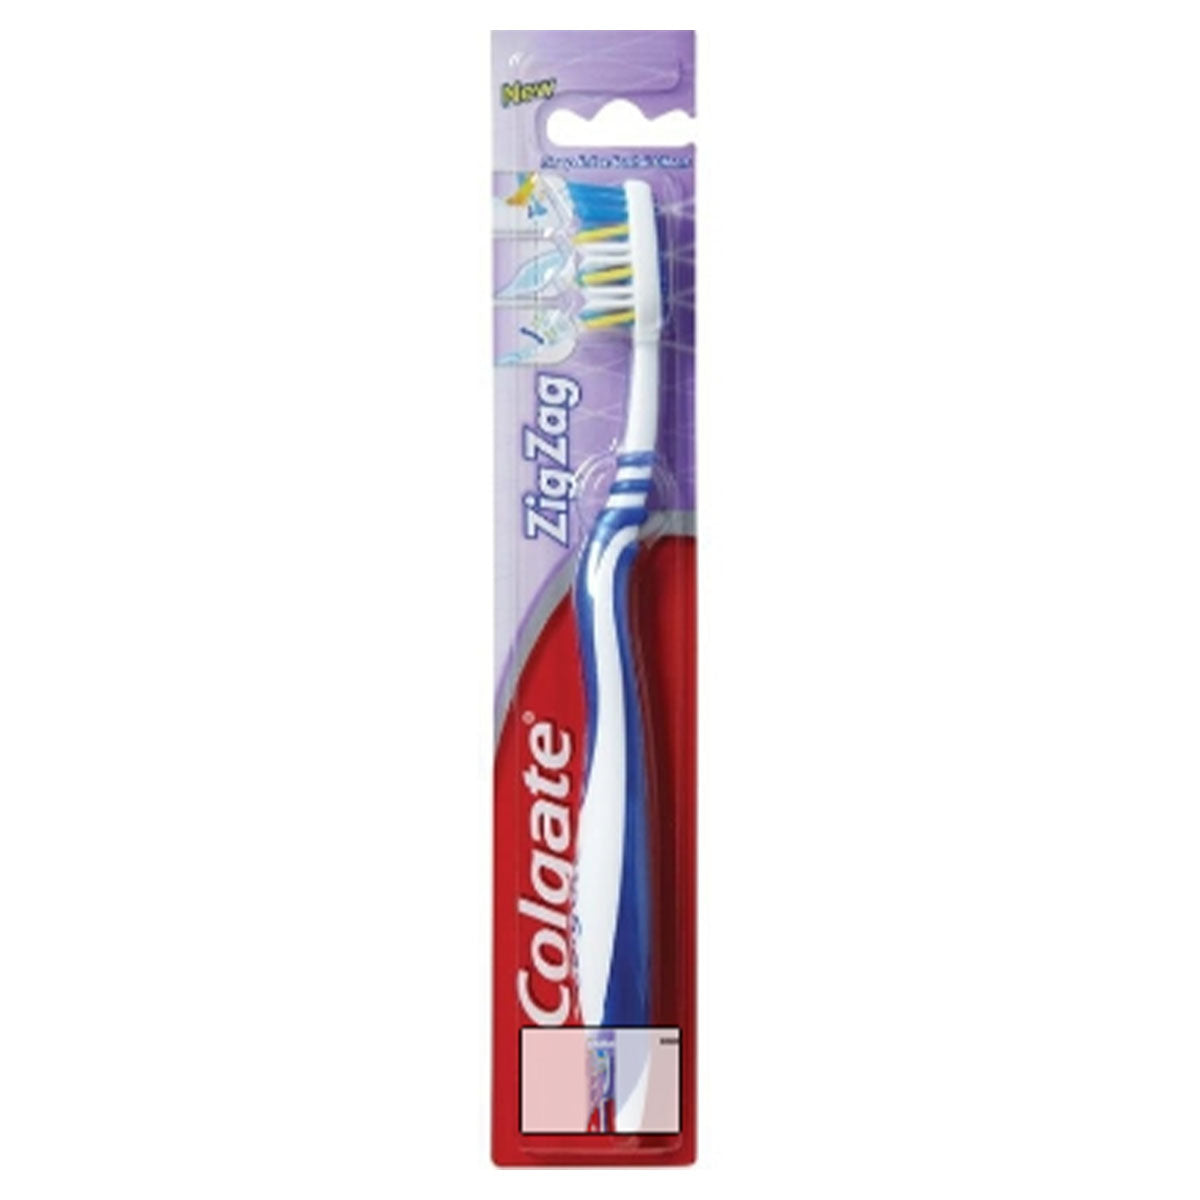 Colgate - ZigZag Medium Toothbrush - 1pc - Continental Food Store